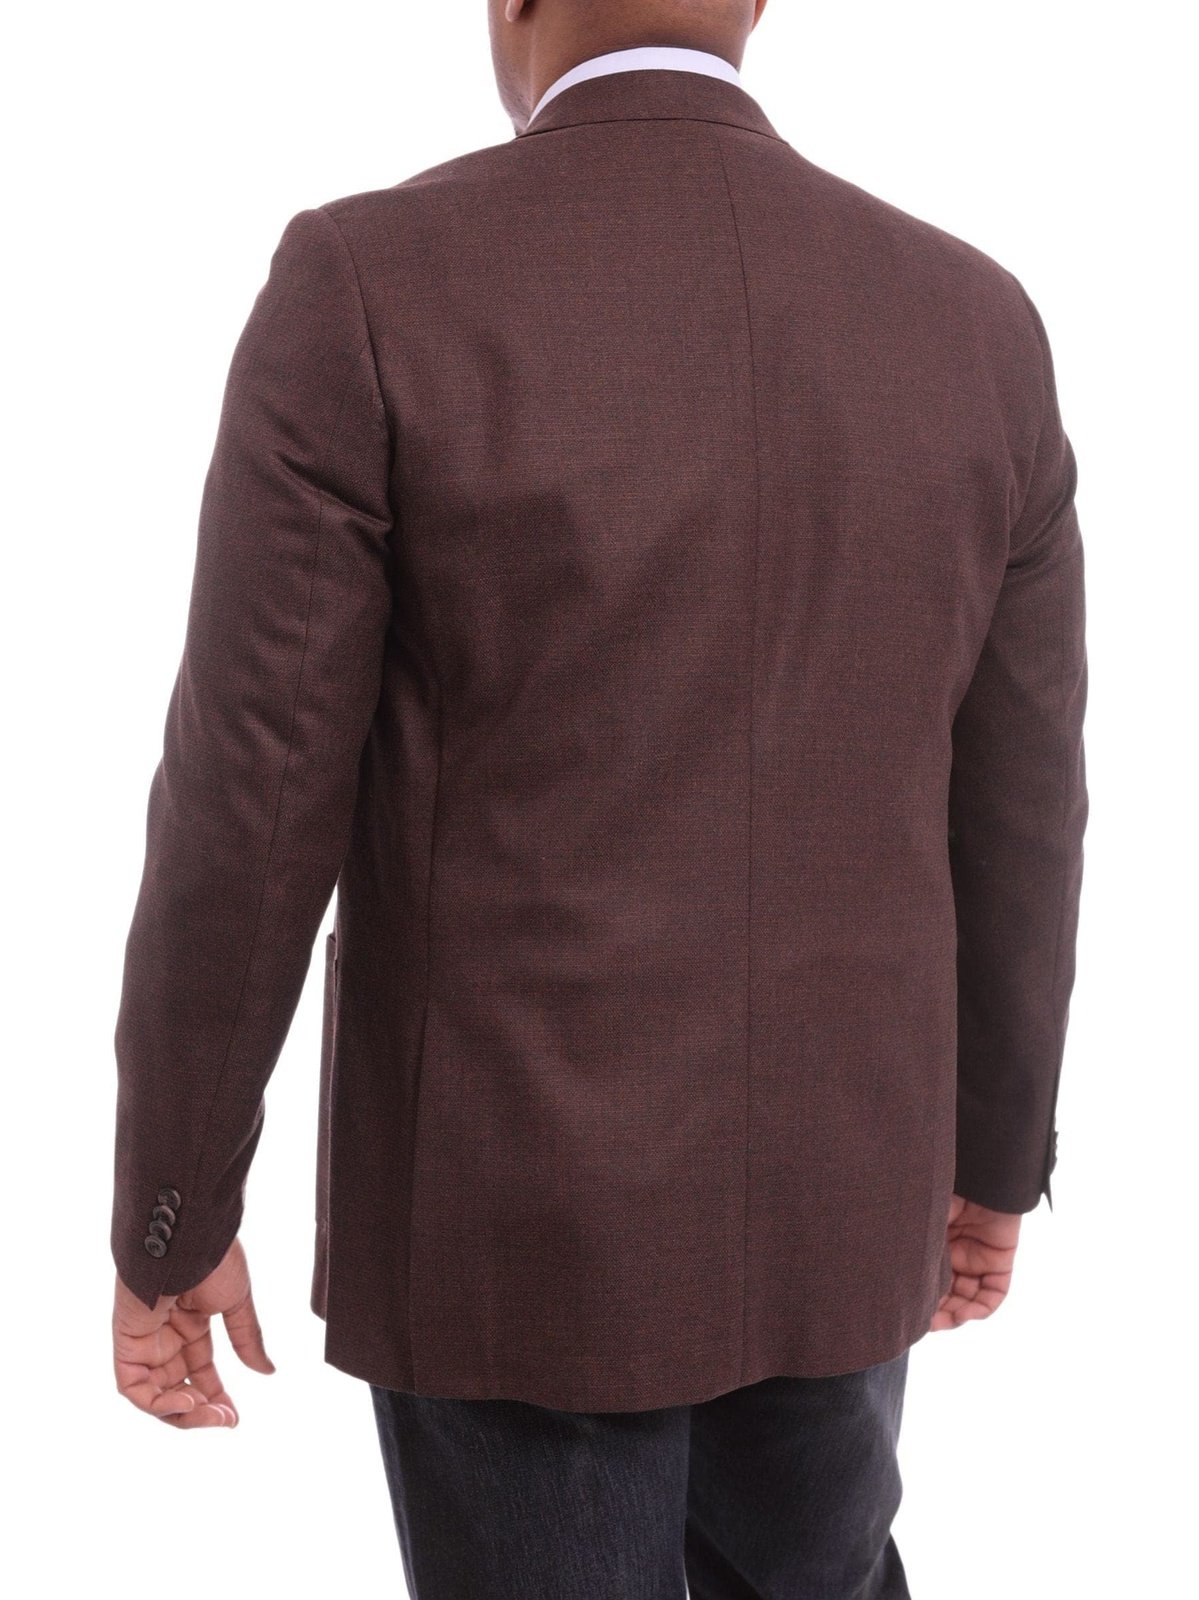 Prontomoda BLAZERS Prontomoda Classic Fit Brown Lambs Wool Blazer Sportcoat With Patch Pockets